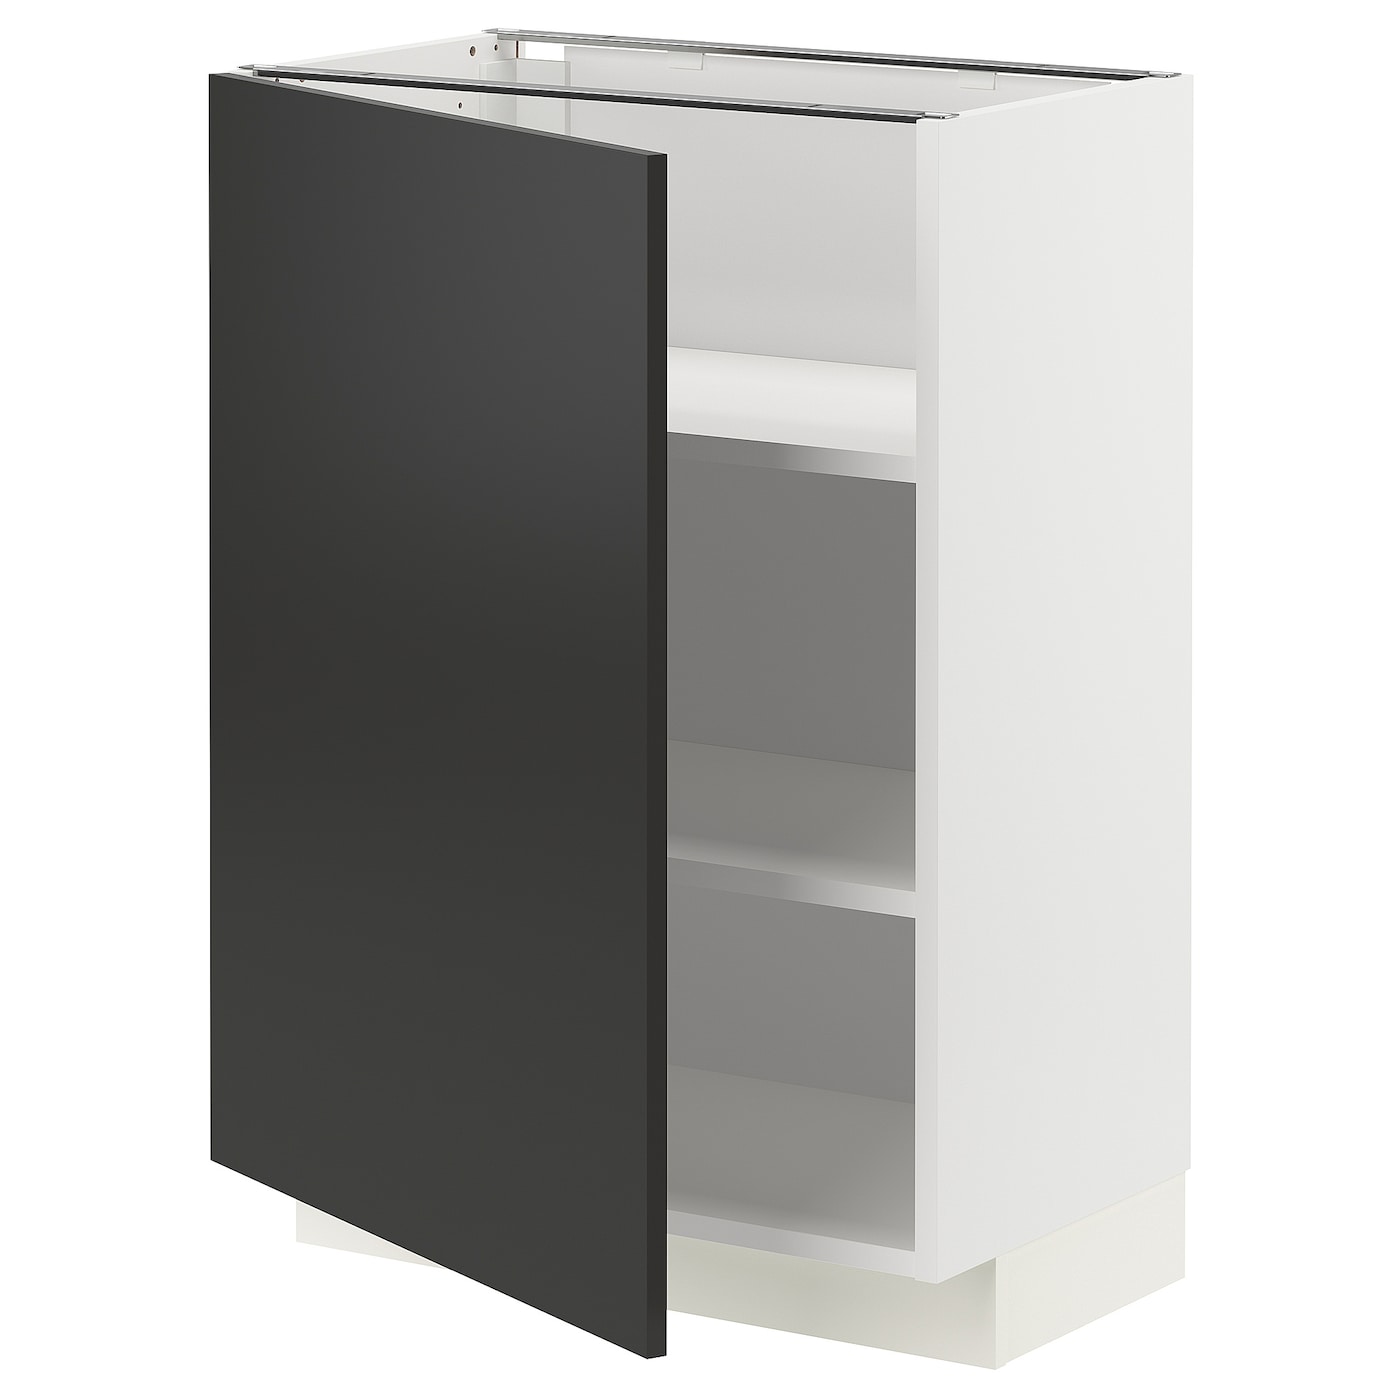 Напольный шкаф - METOD IKEA/ МЕТОД ИКЕА,  88х60 см, белый/темно-серый